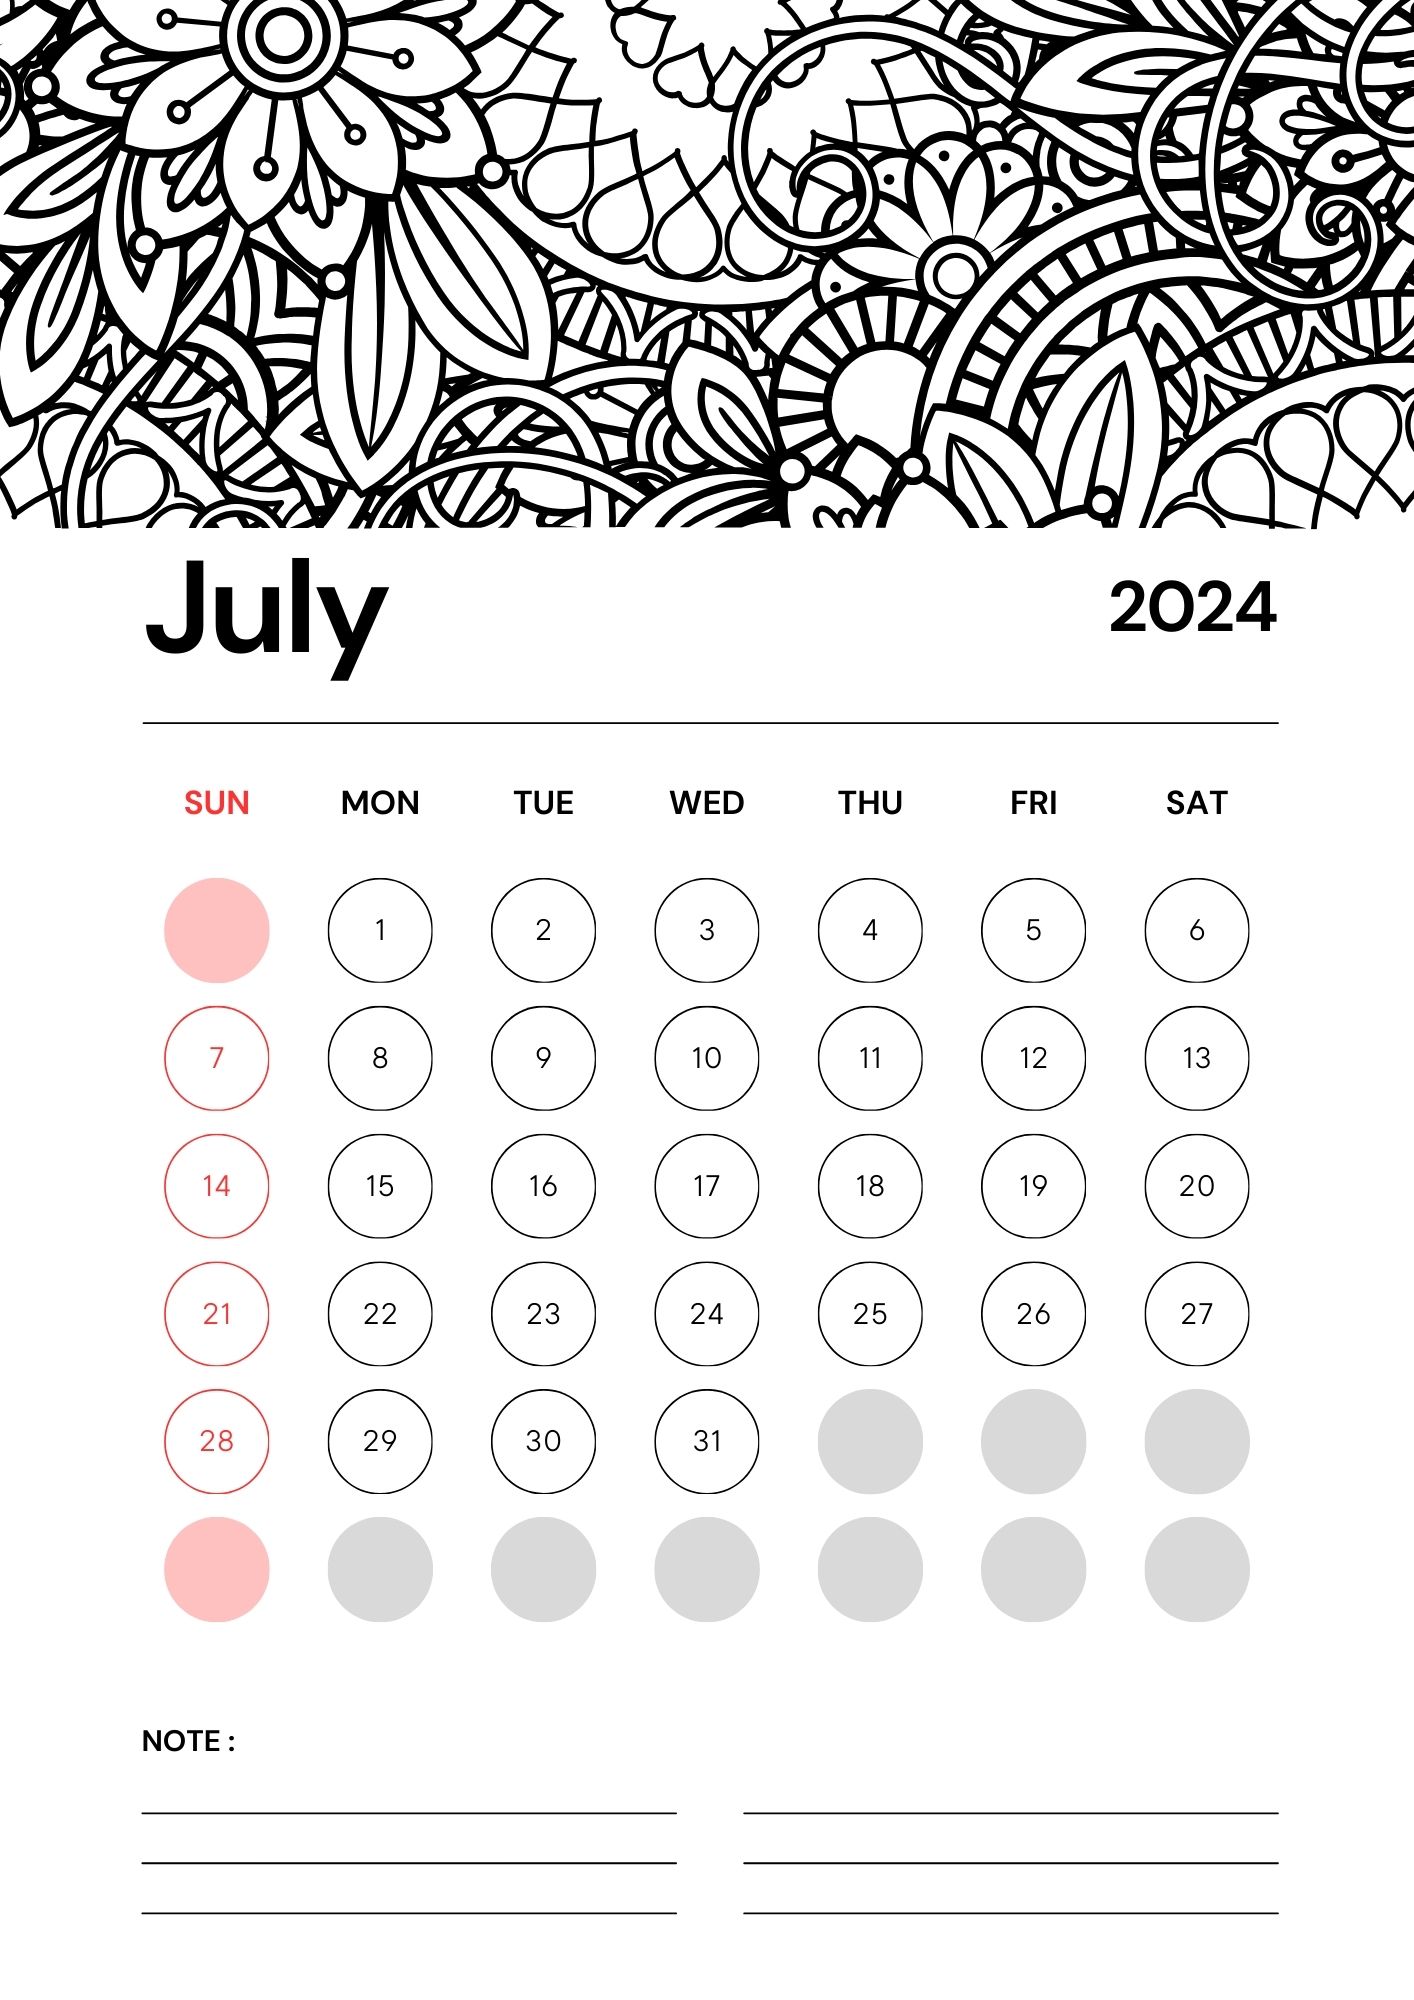 July Calendars - 100% FREE PRINTABLES